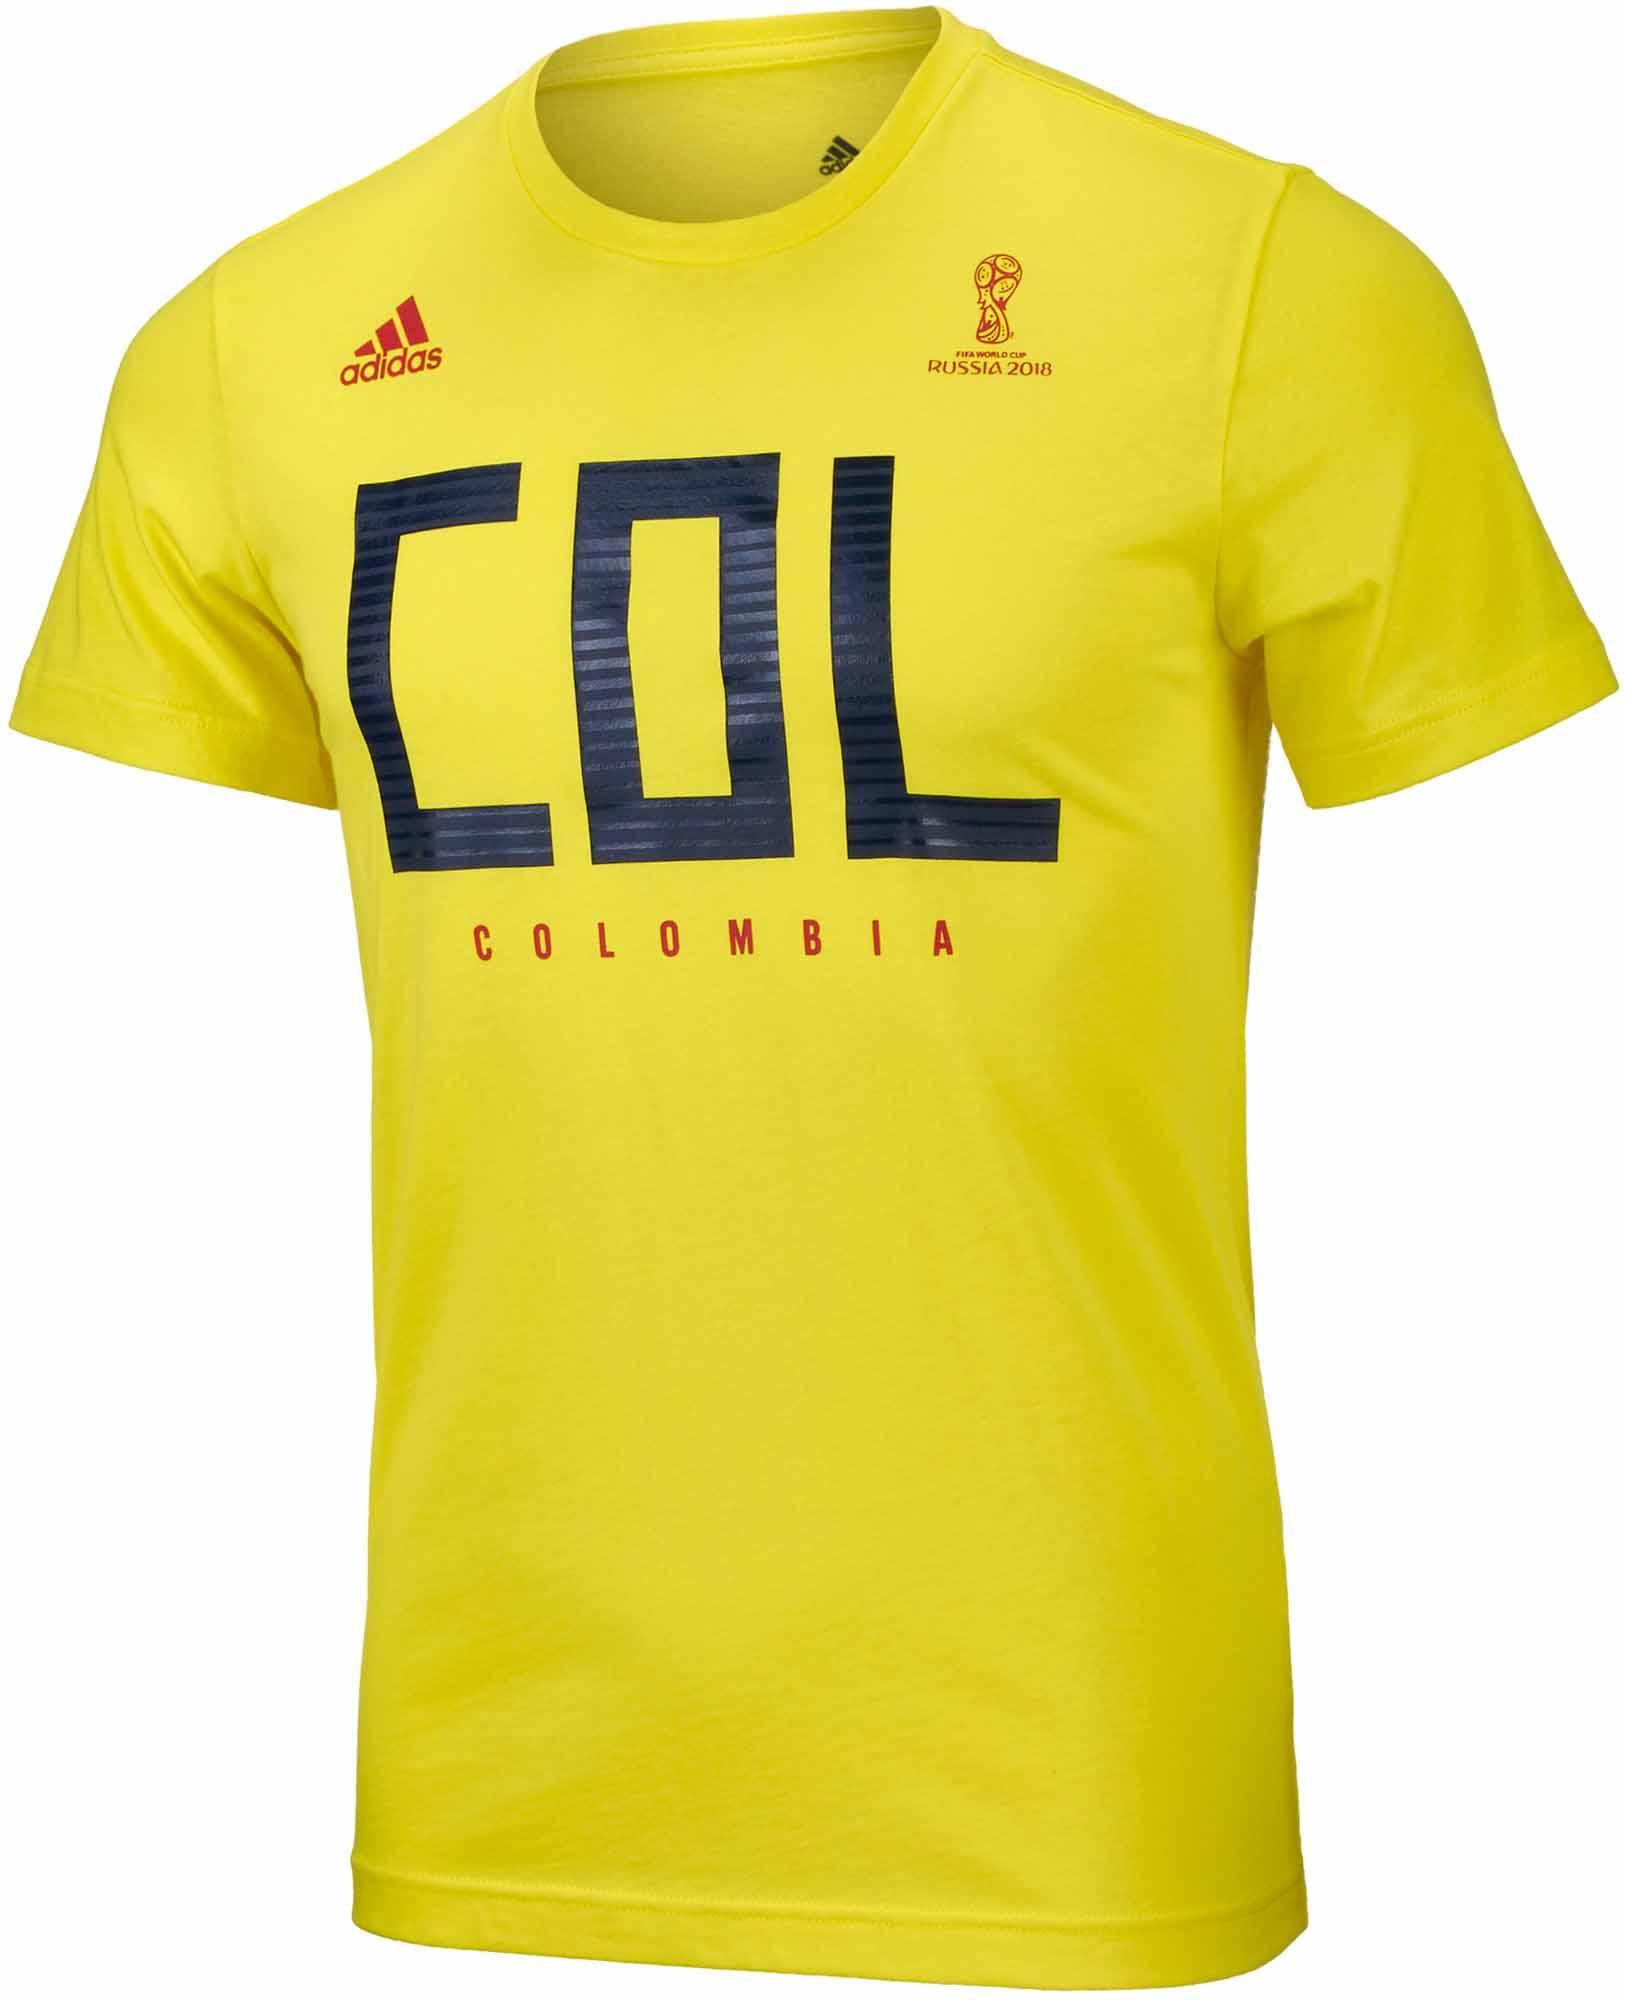 Visible flexible Pronunciar adidas Colombia Tee - Bright Yellow - SoccerPro